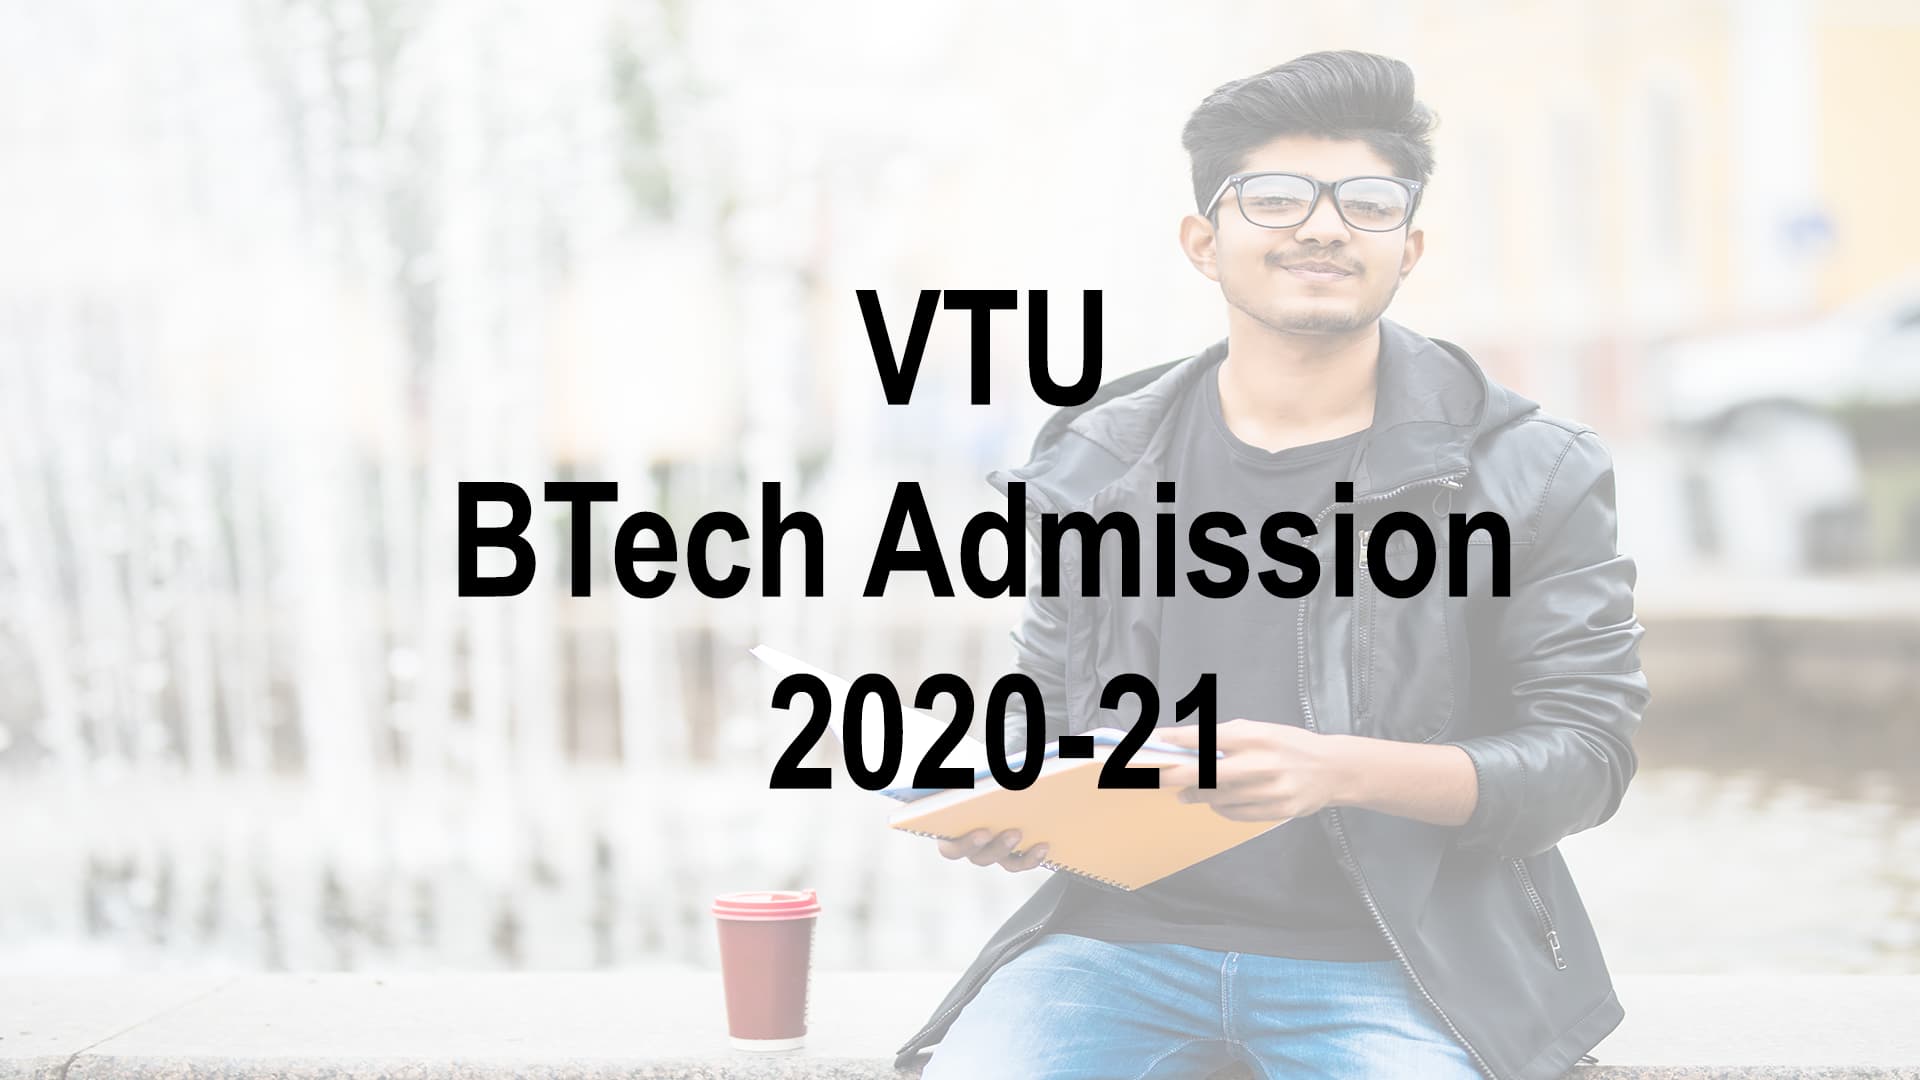 VTU BTech Admission 2020-21